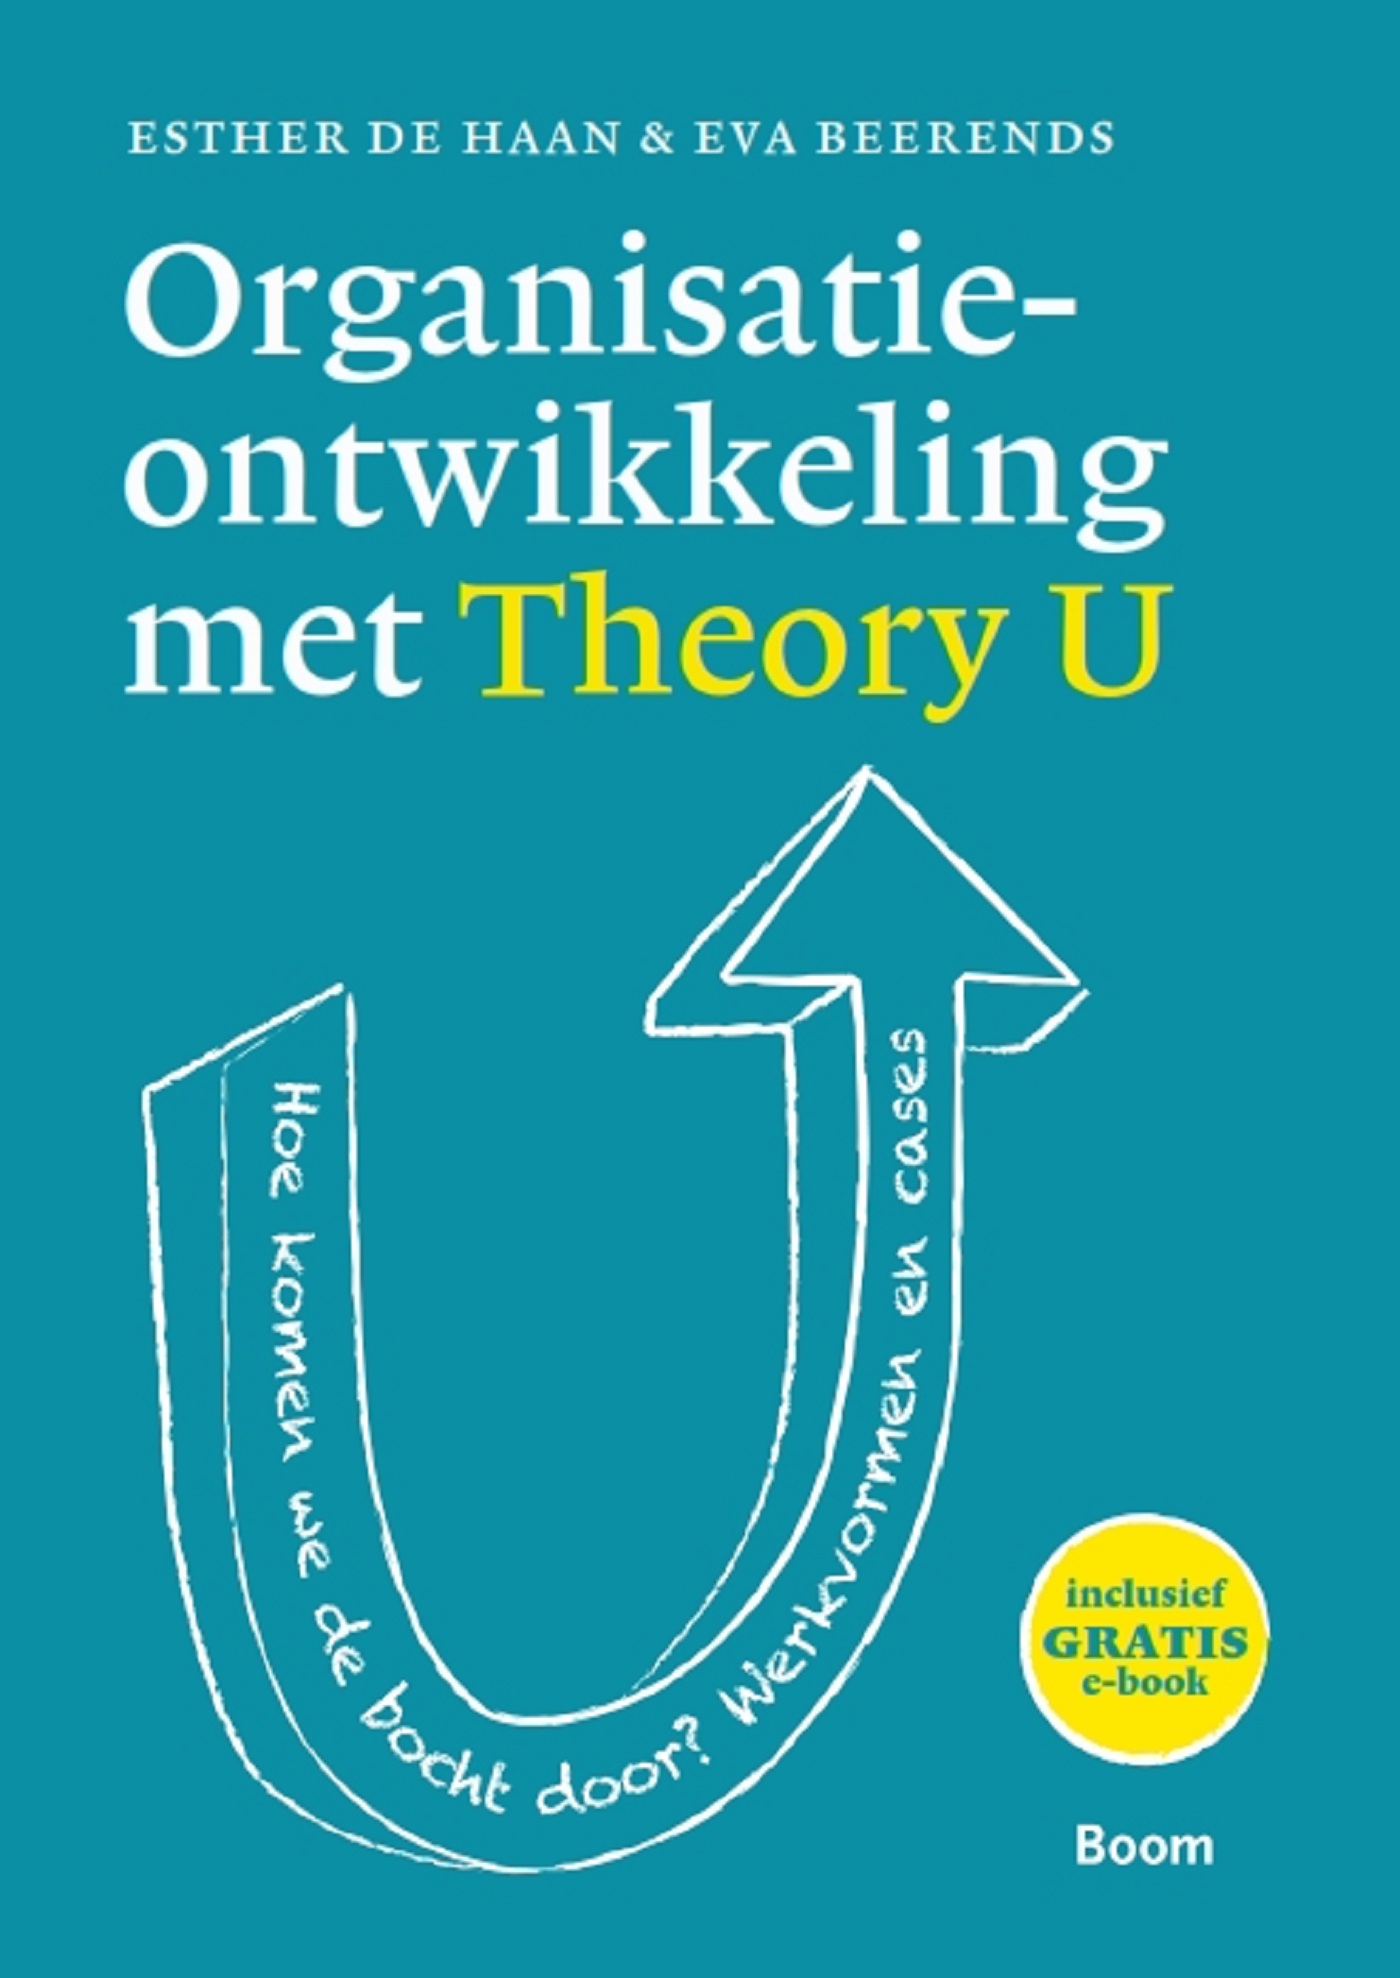 Organisatieontwikkeling met Theory U (Ebook)